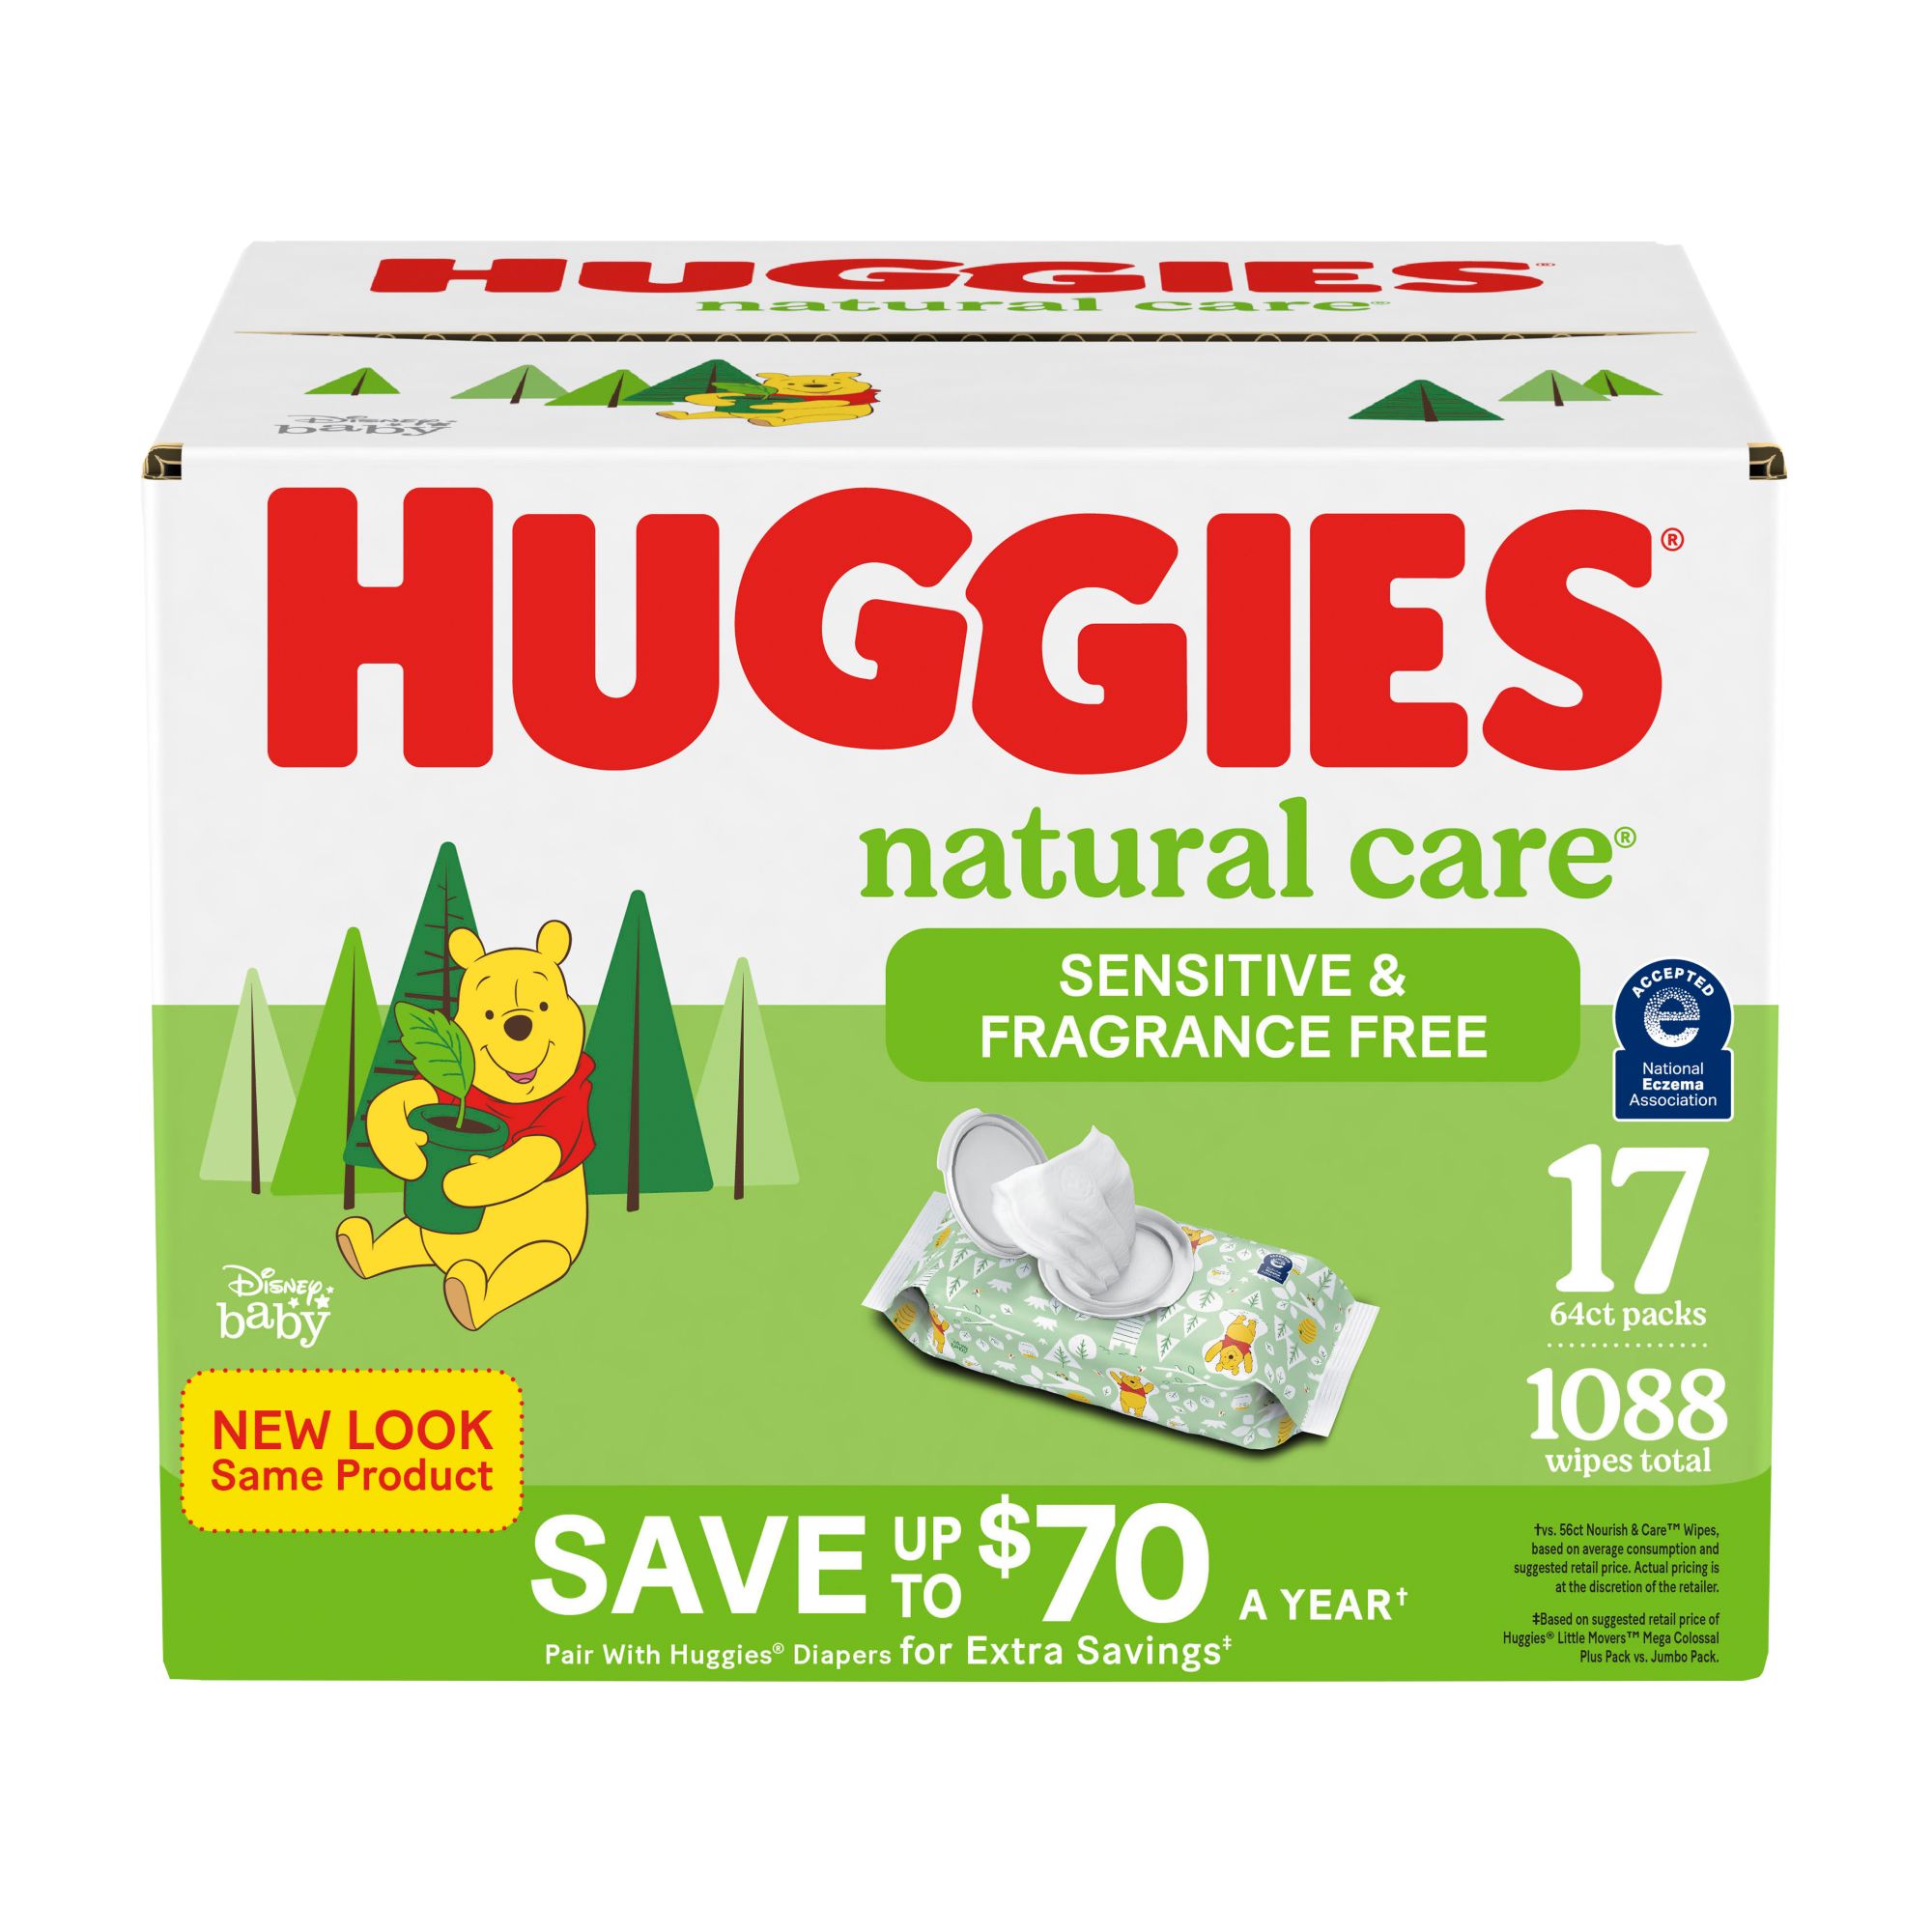 huggies natural care extra sensitive wipes